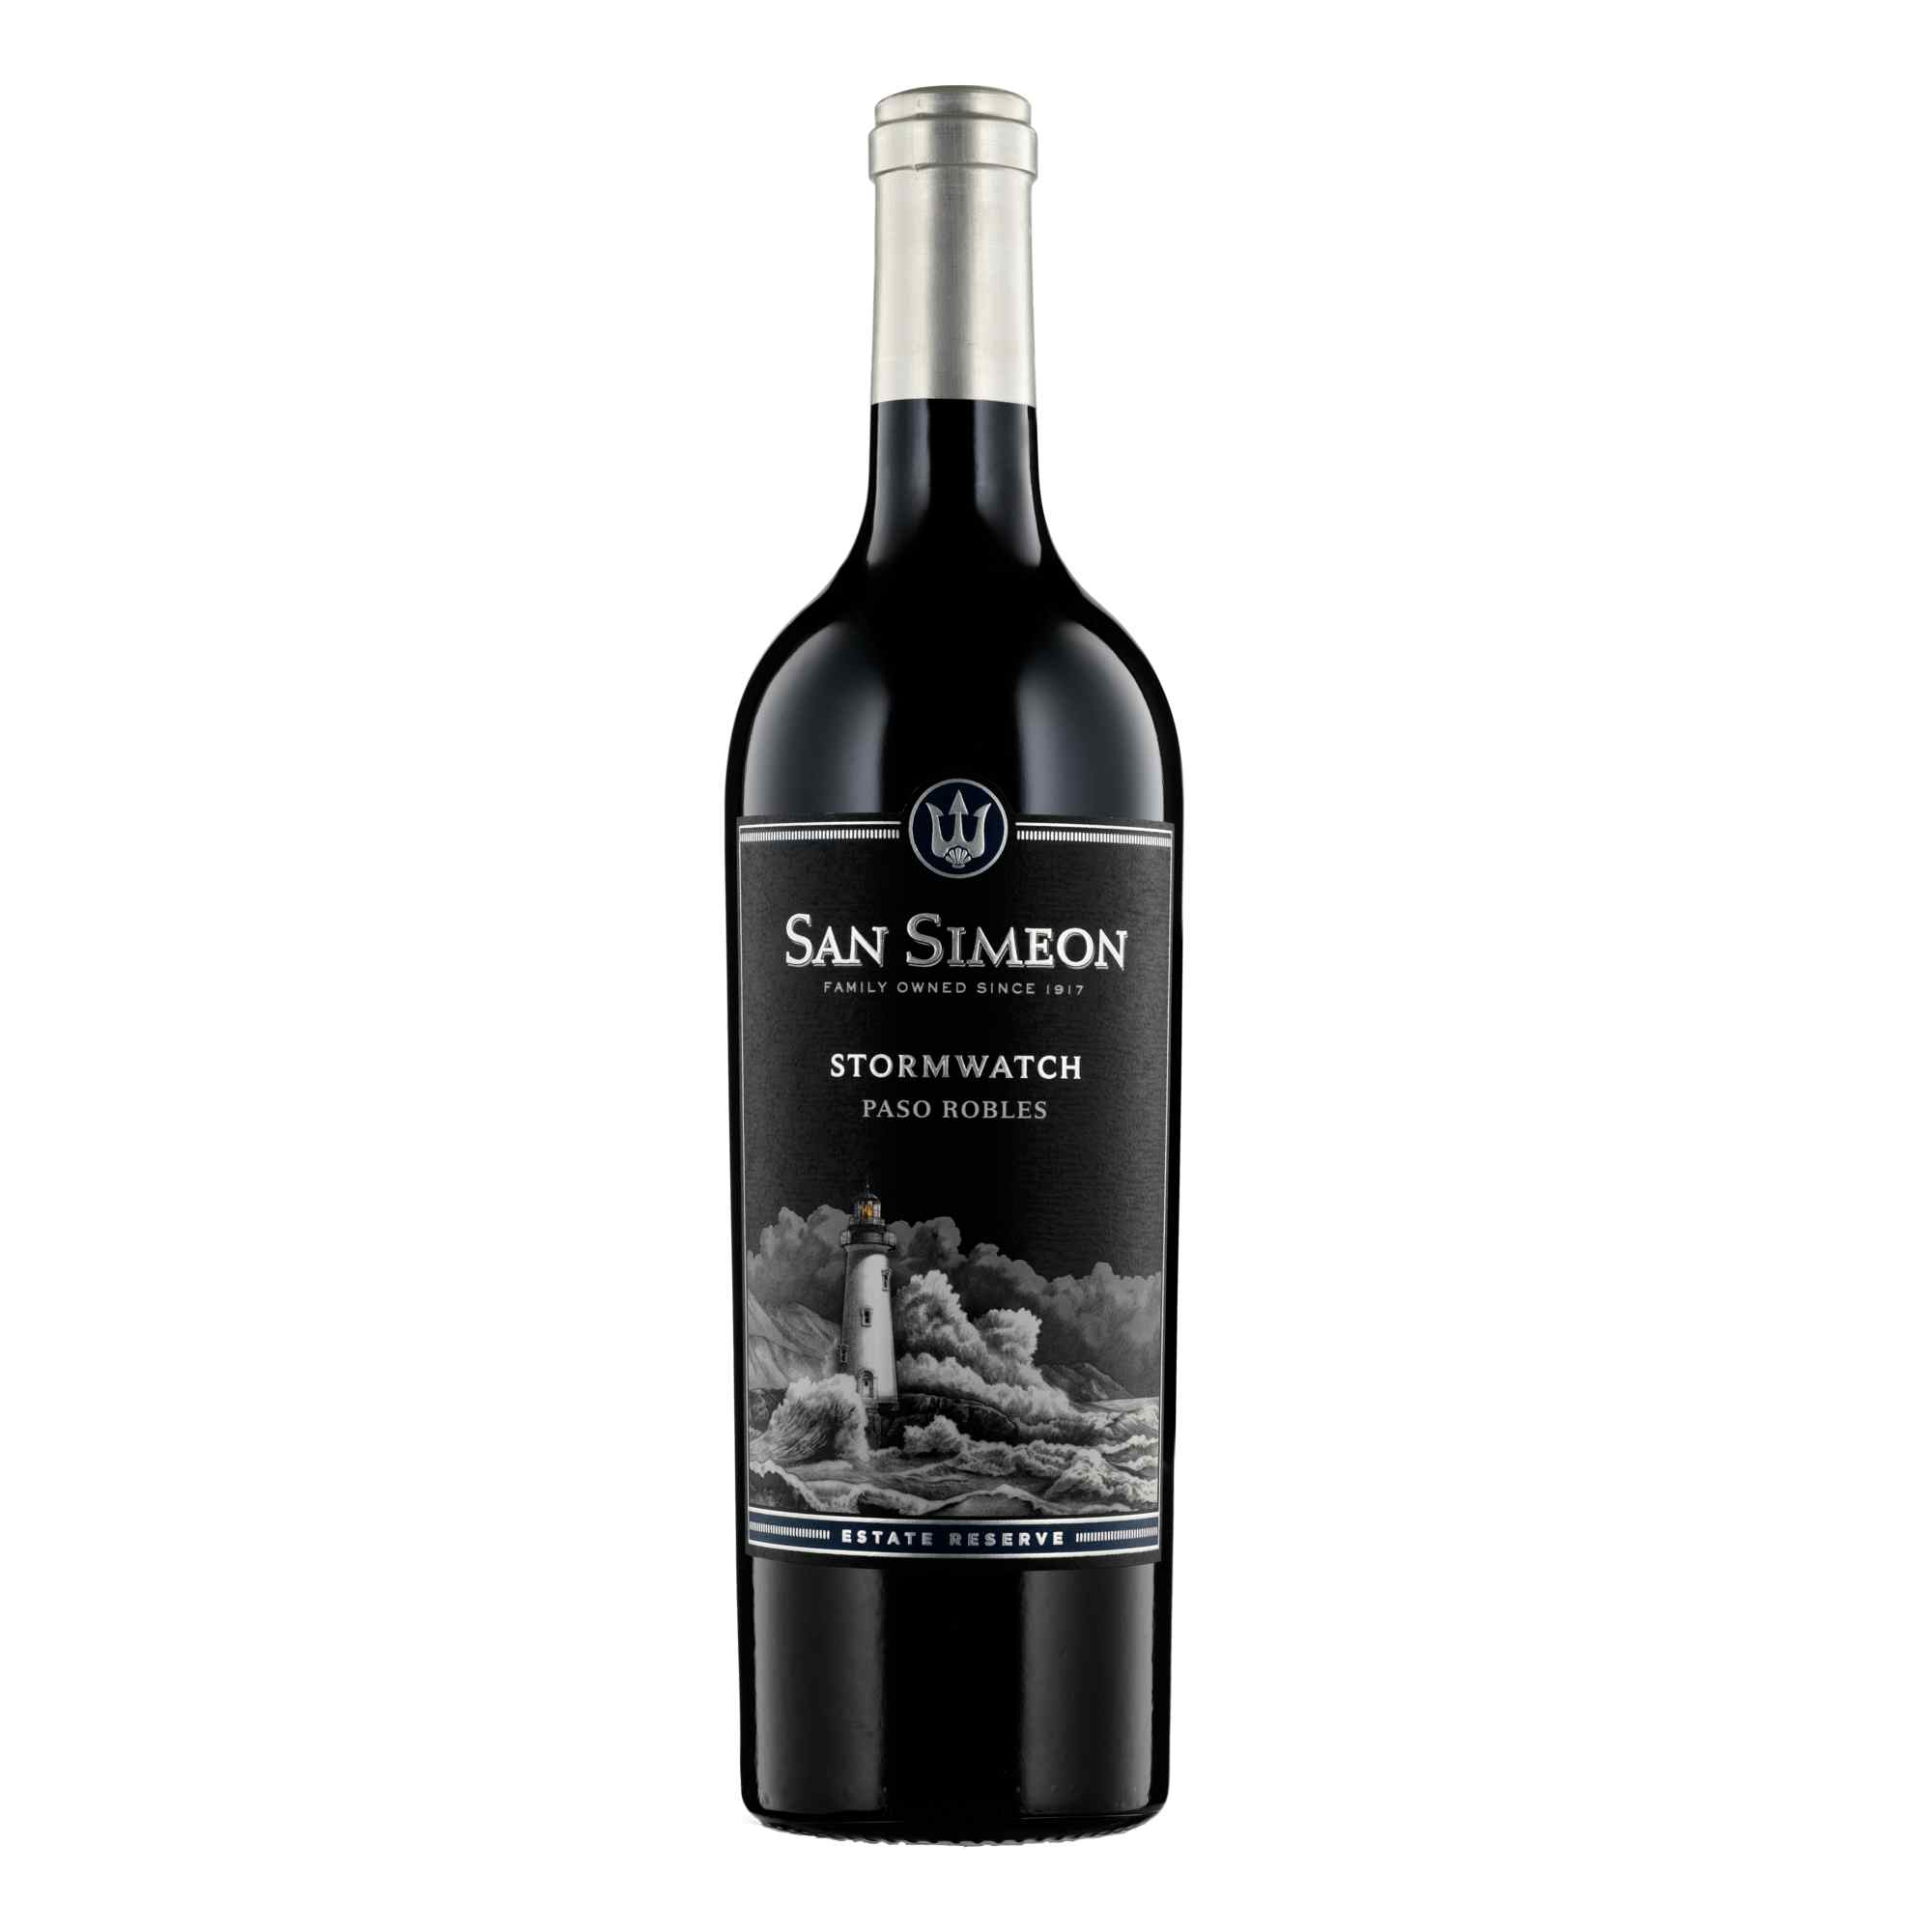 San Simeon Paso Robles Stormwatch Red Wine